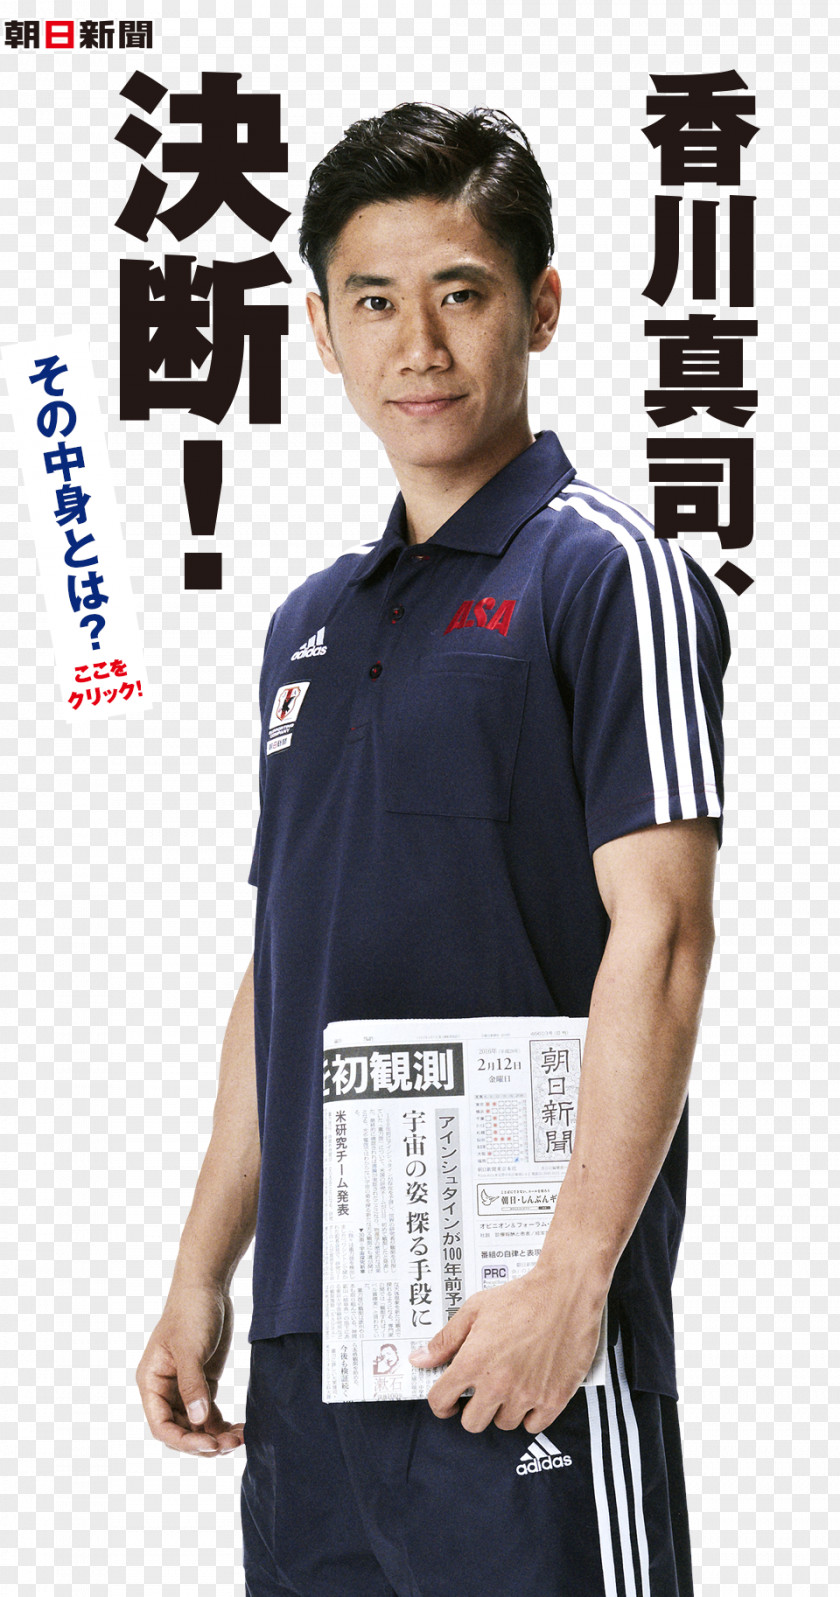 Footbool Japan National Football Team Shinji Kagawa Player FIFA World Cup PNG